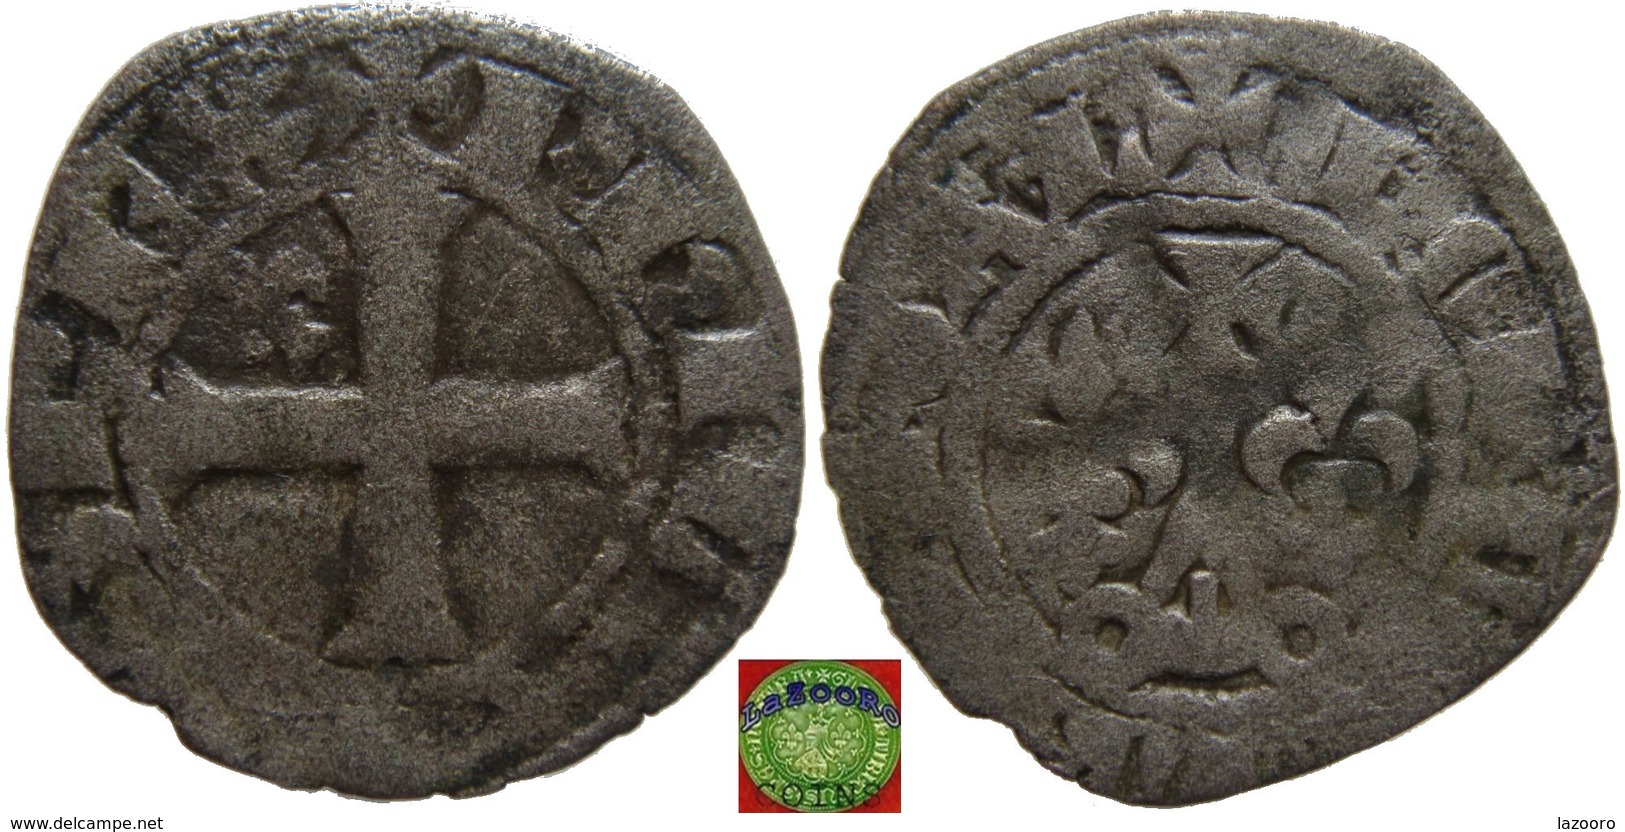 LaZooRo: France - AR Double Tournois Of Philip IV (1285-1314), MON DVPLEX REGAL - Silver - 1285-1314 Philip IV The Fair